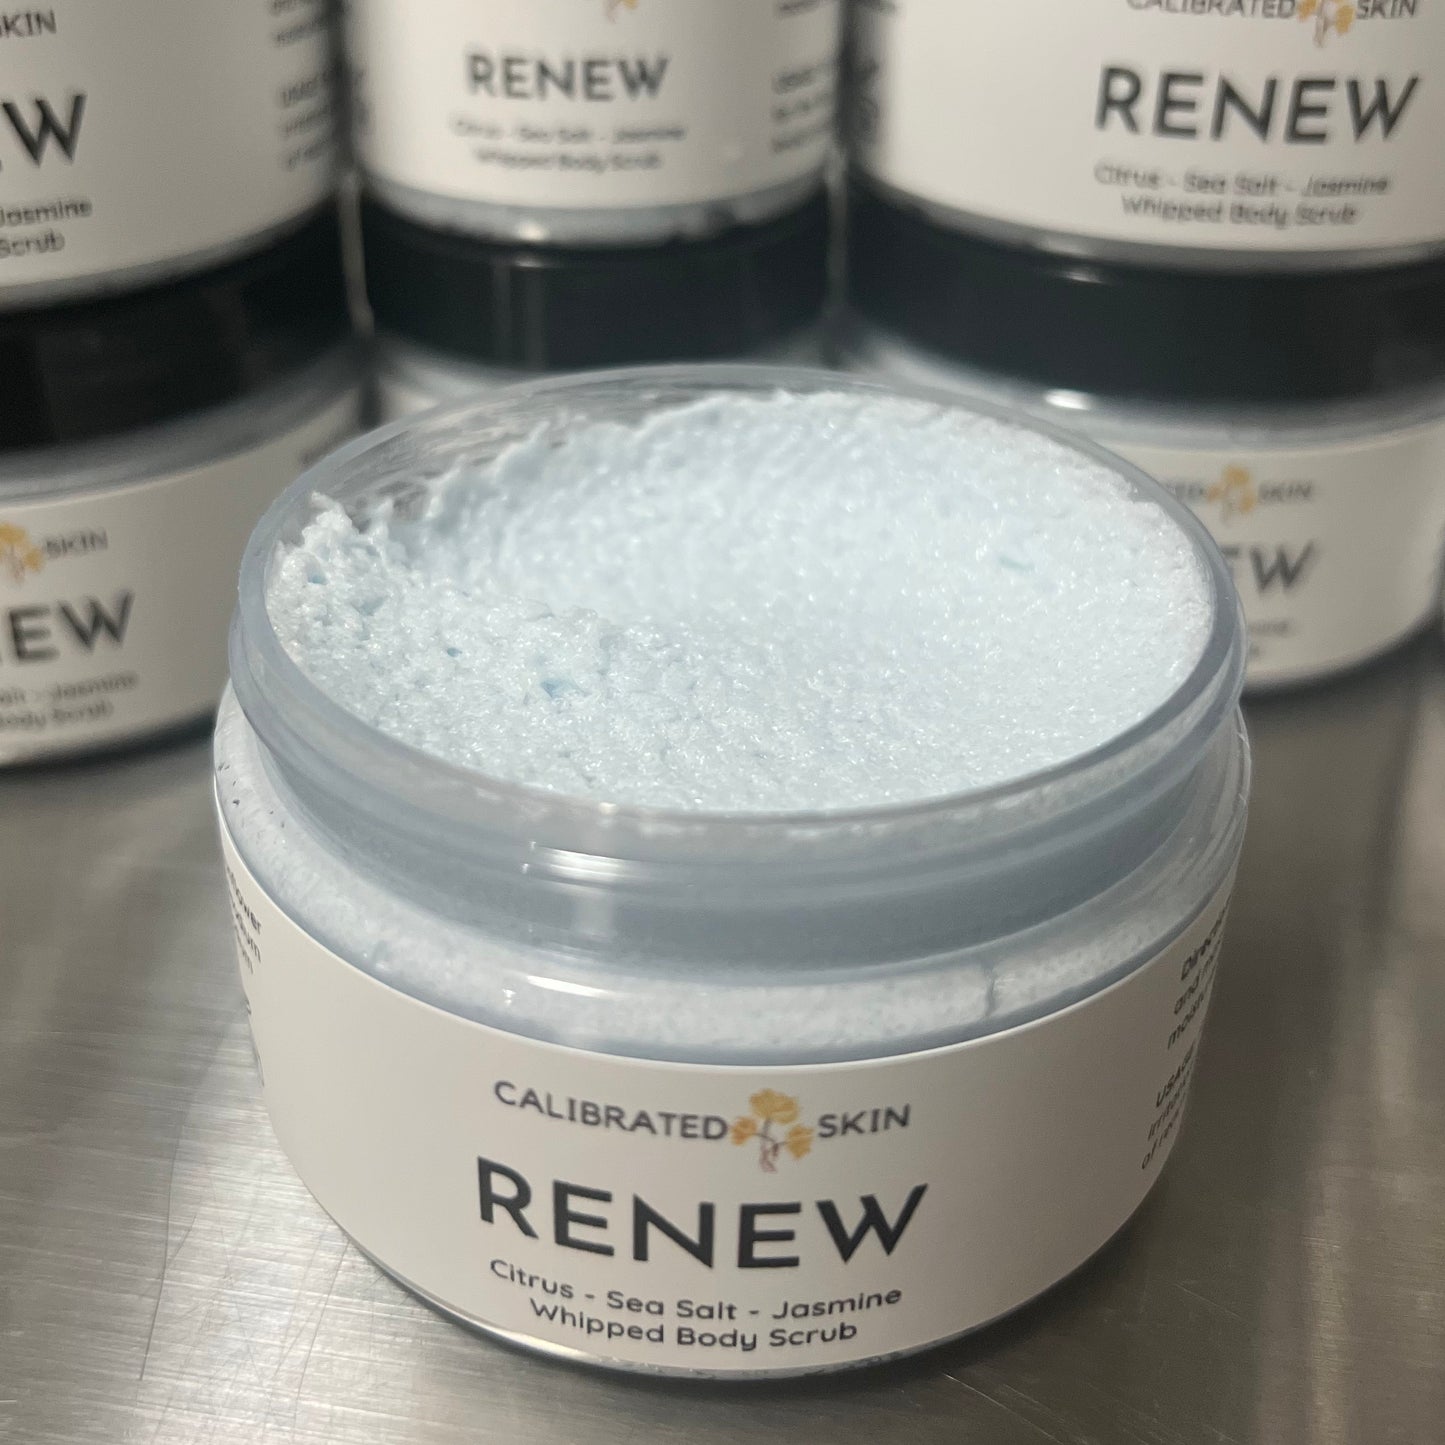 RENEW Whipped Body Scrub (Citrus, Sea Salt, Jasmine)